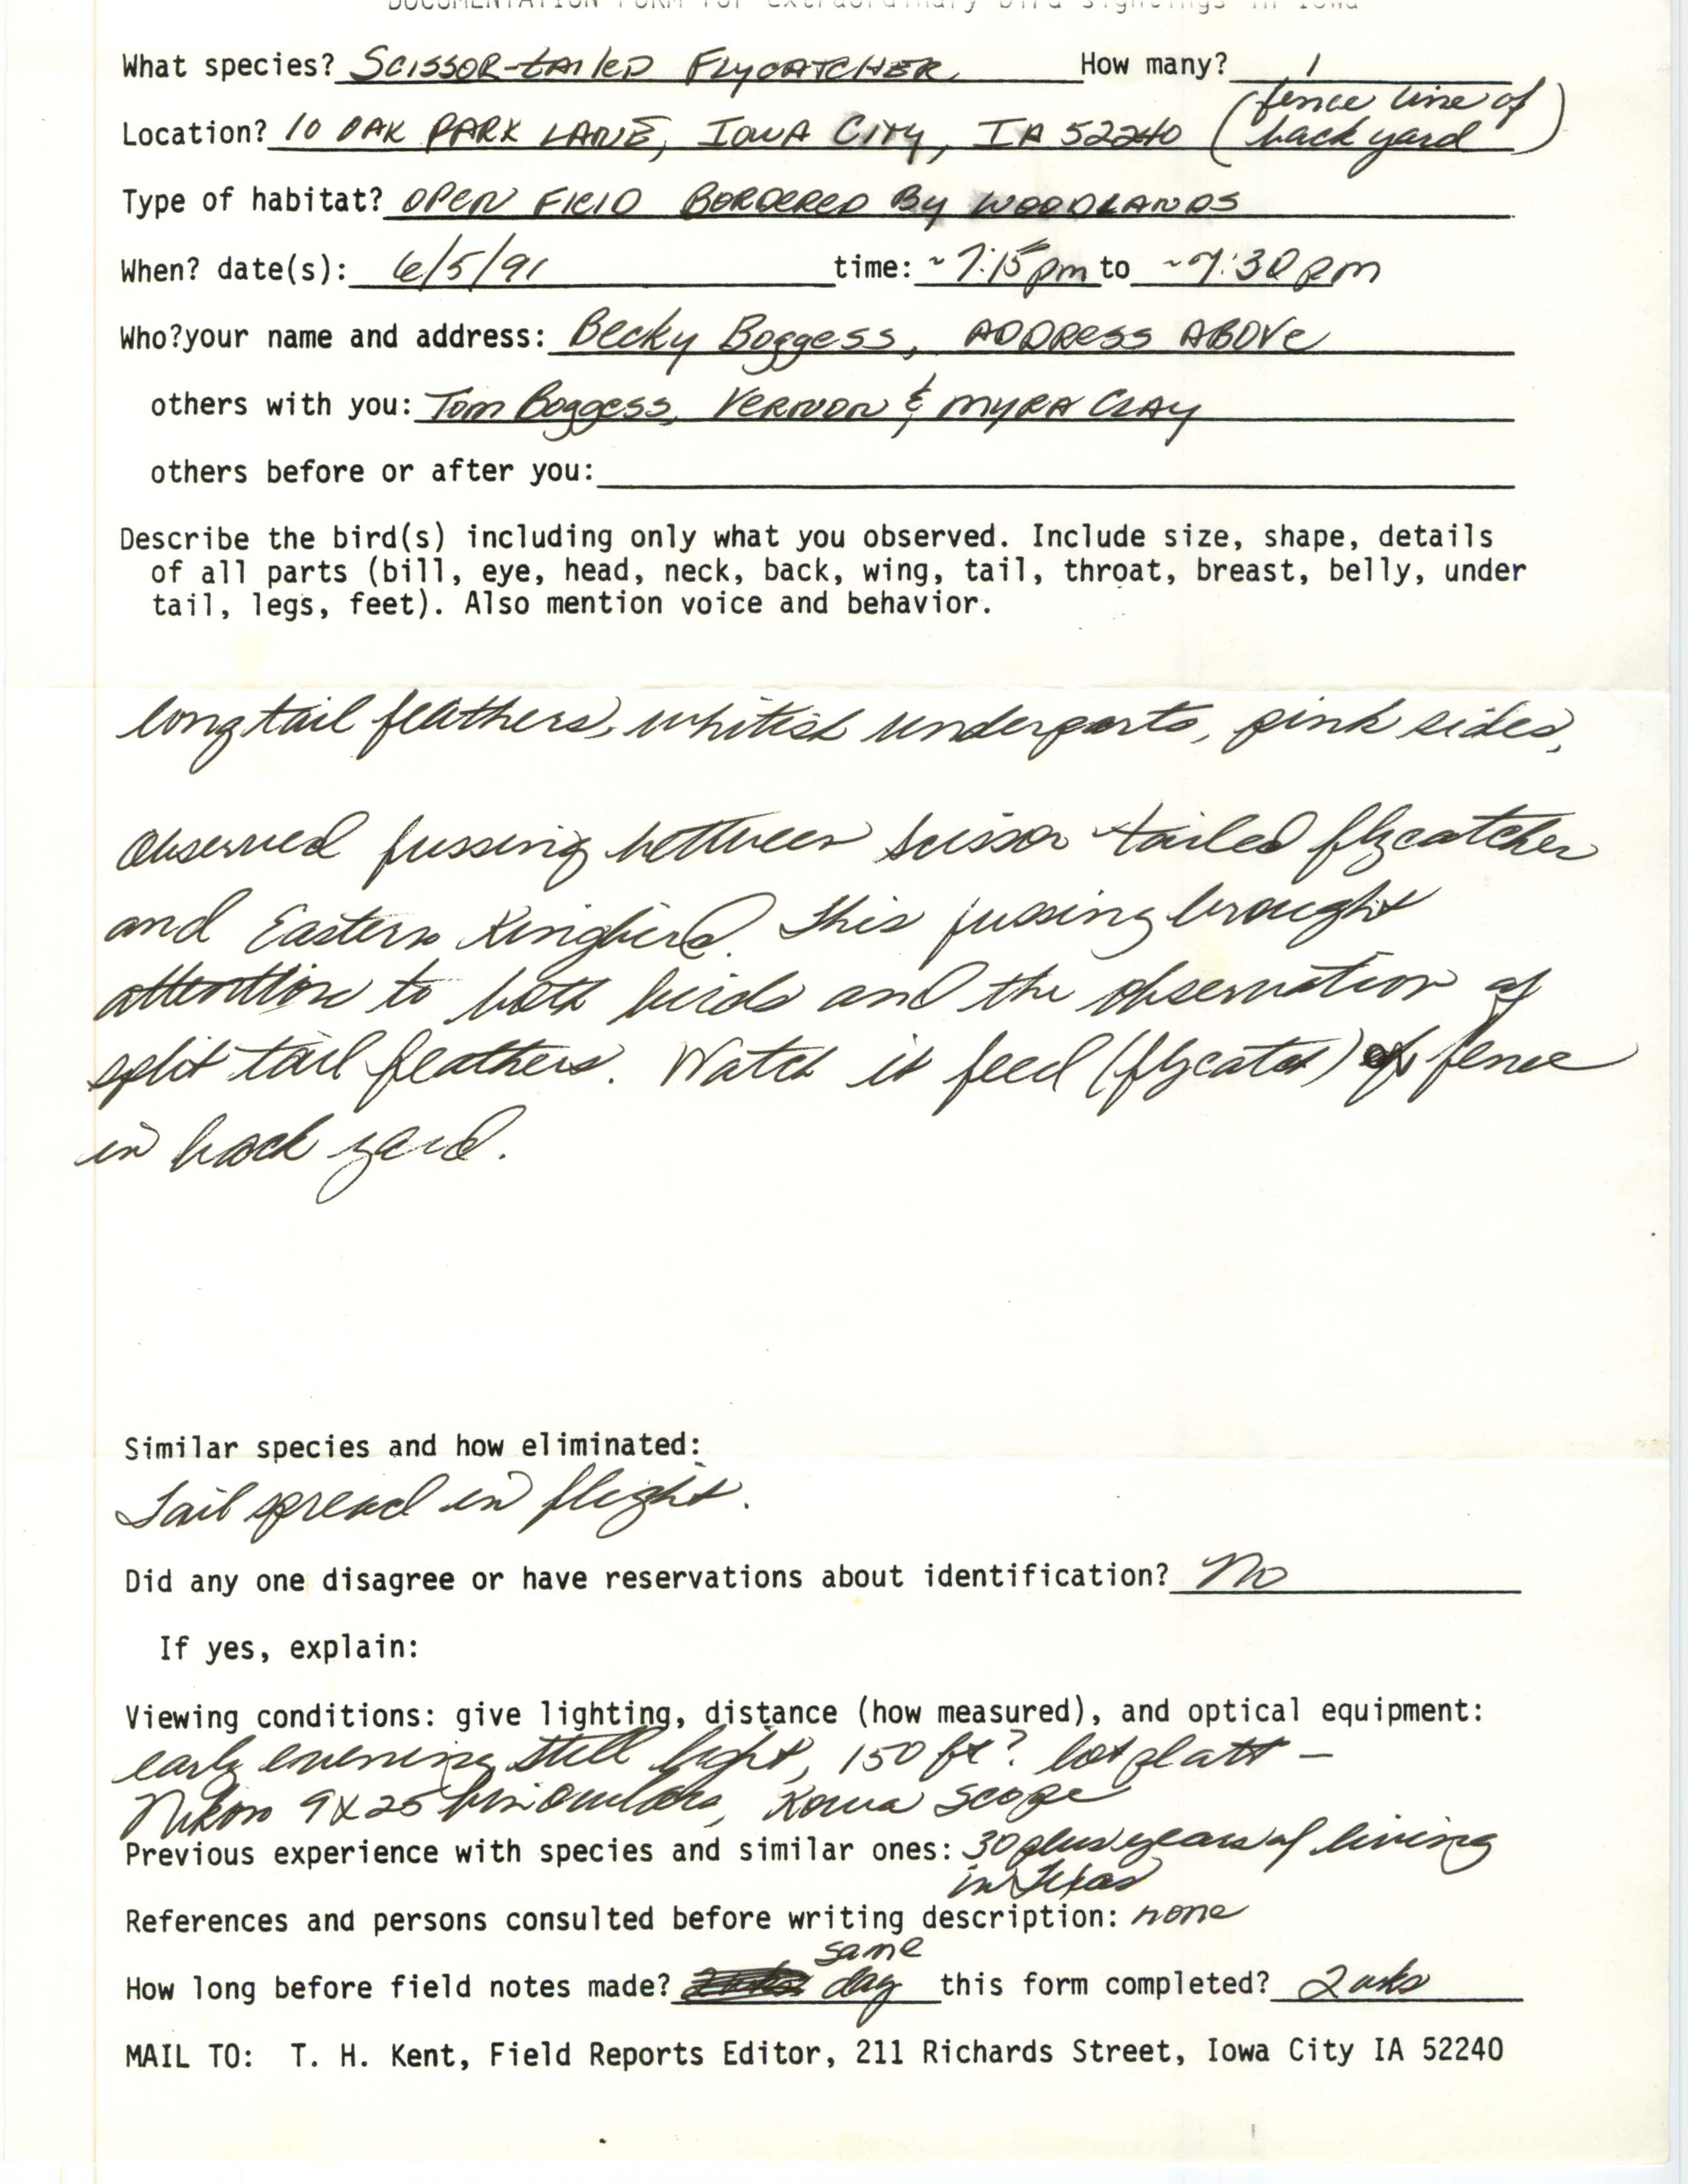 Rare bird documentation form for Scissor-tailed Flycatcher at Iowa City, 1991